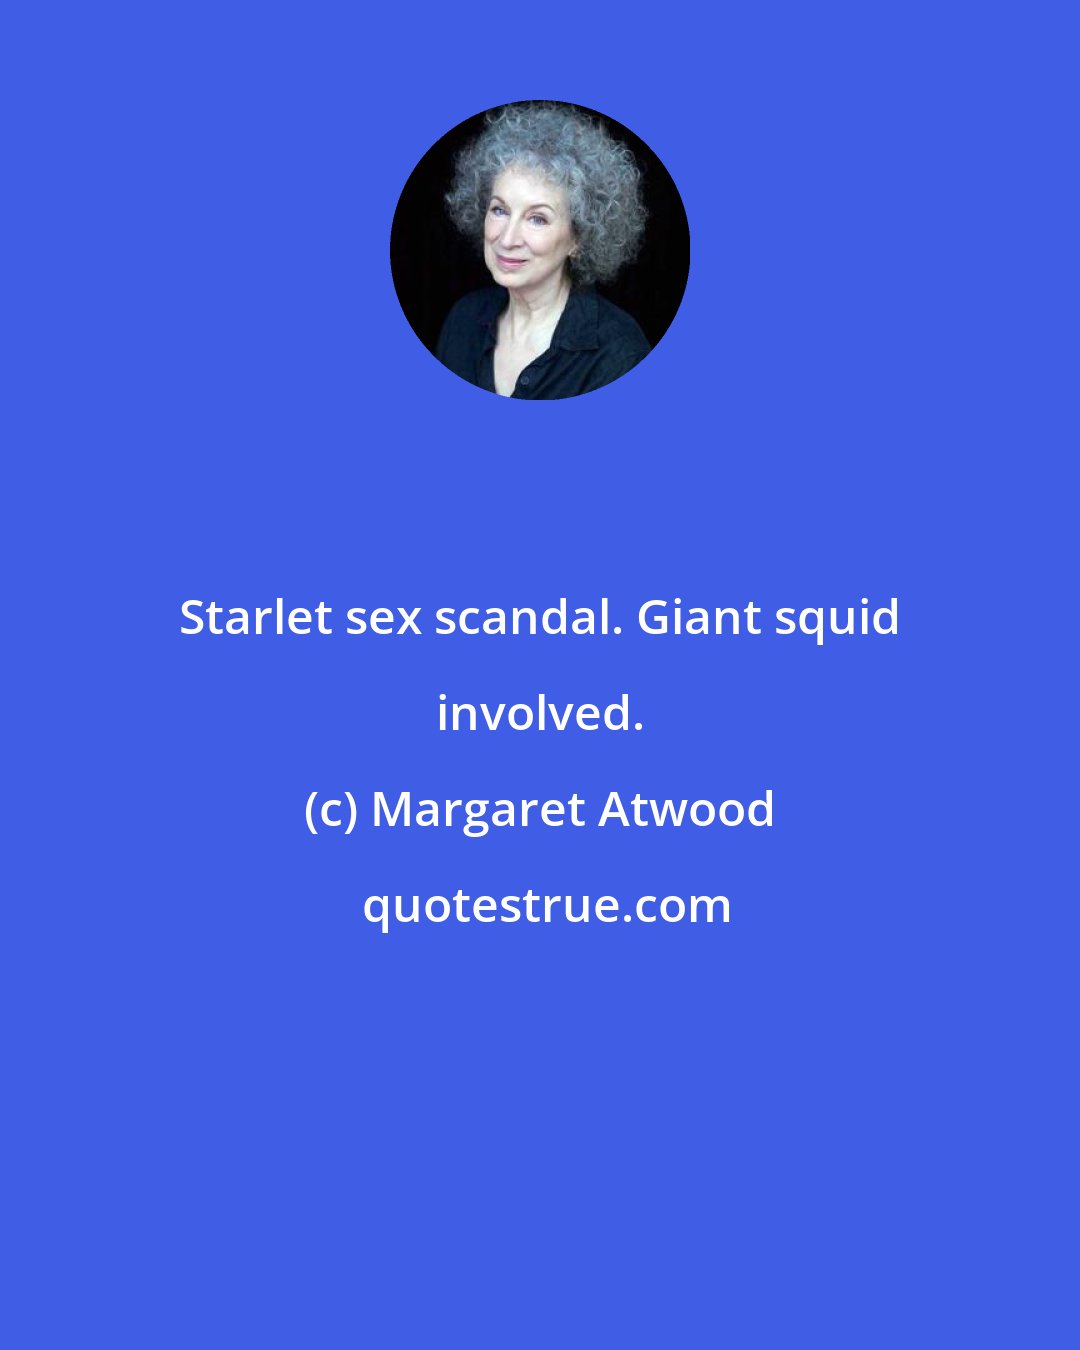 Margaret Atwood: Starlet sex scandal. Giant squid involved.